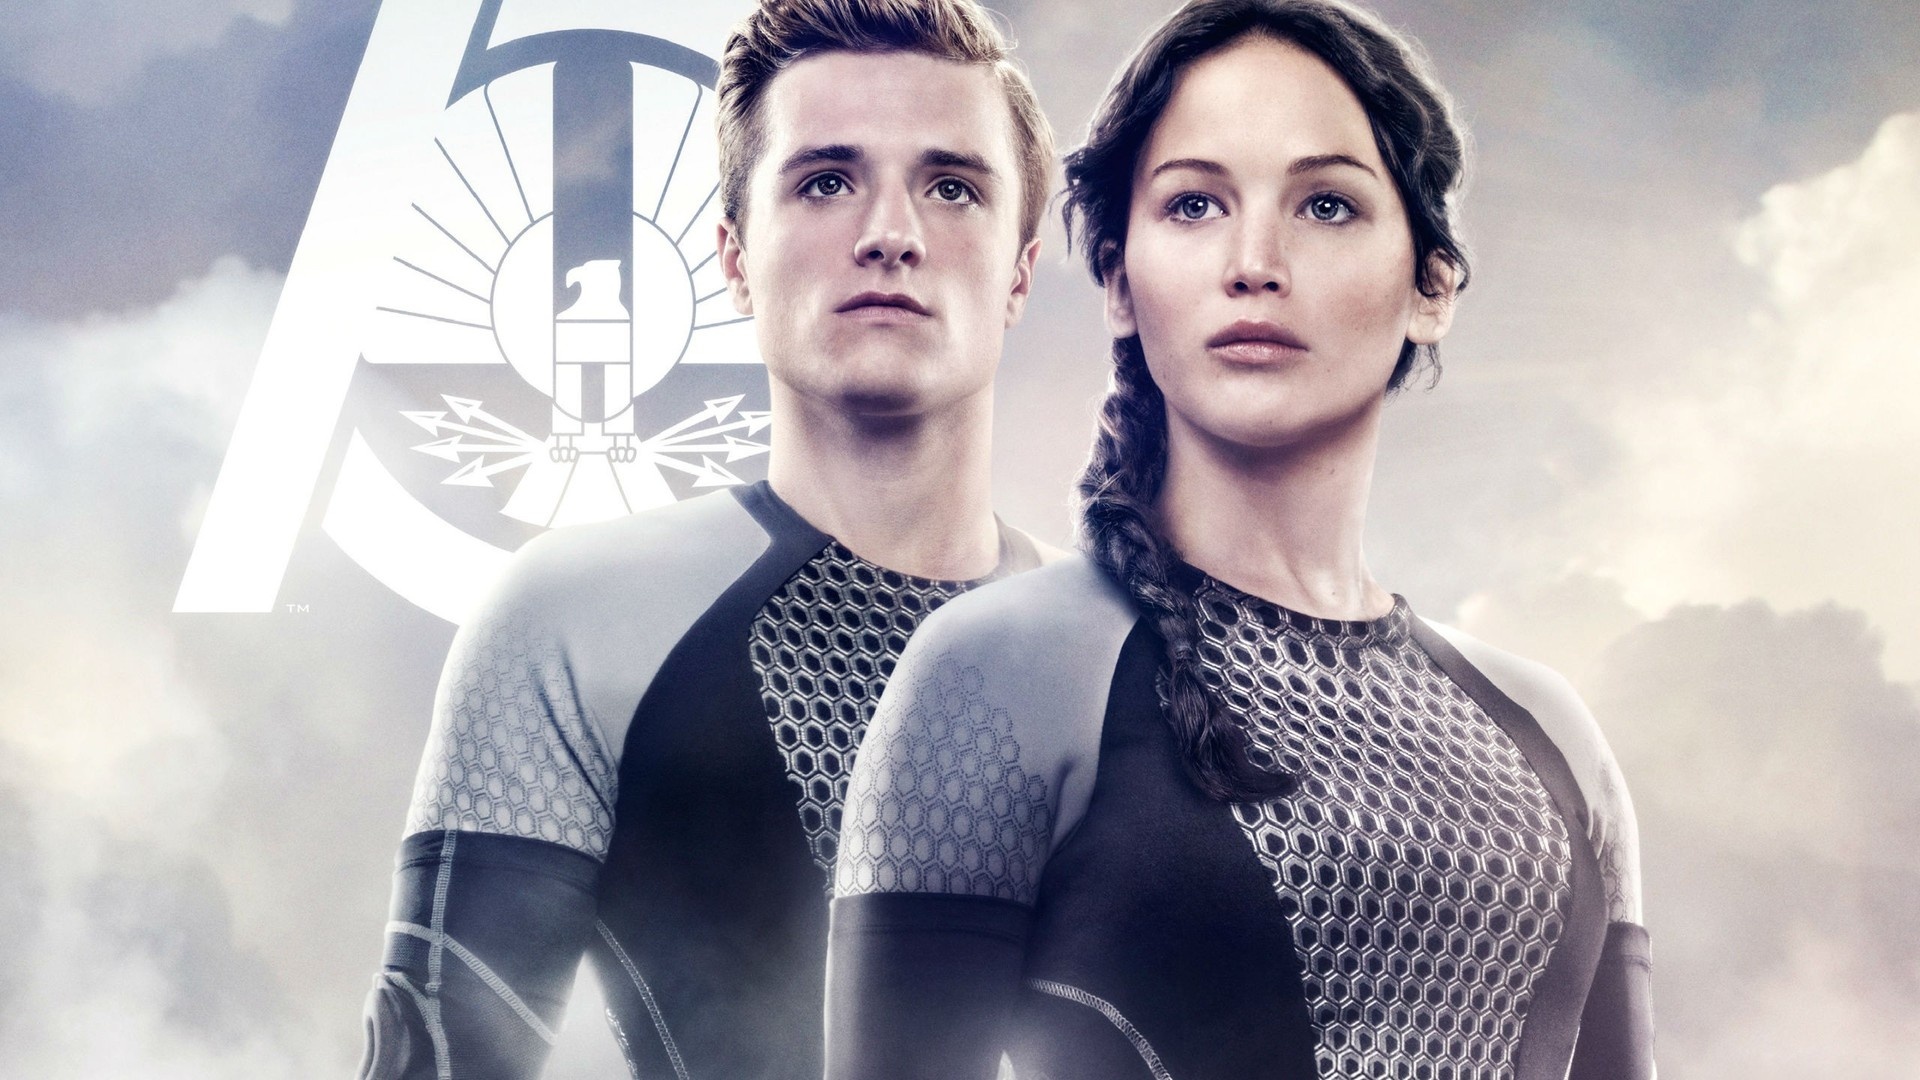 Hunger Games: Jennifer Lawrence as Katniss Everdeen, Josh Hutcherson as Peeta Mellark. 1920x1080 Full HD Wallpaper.